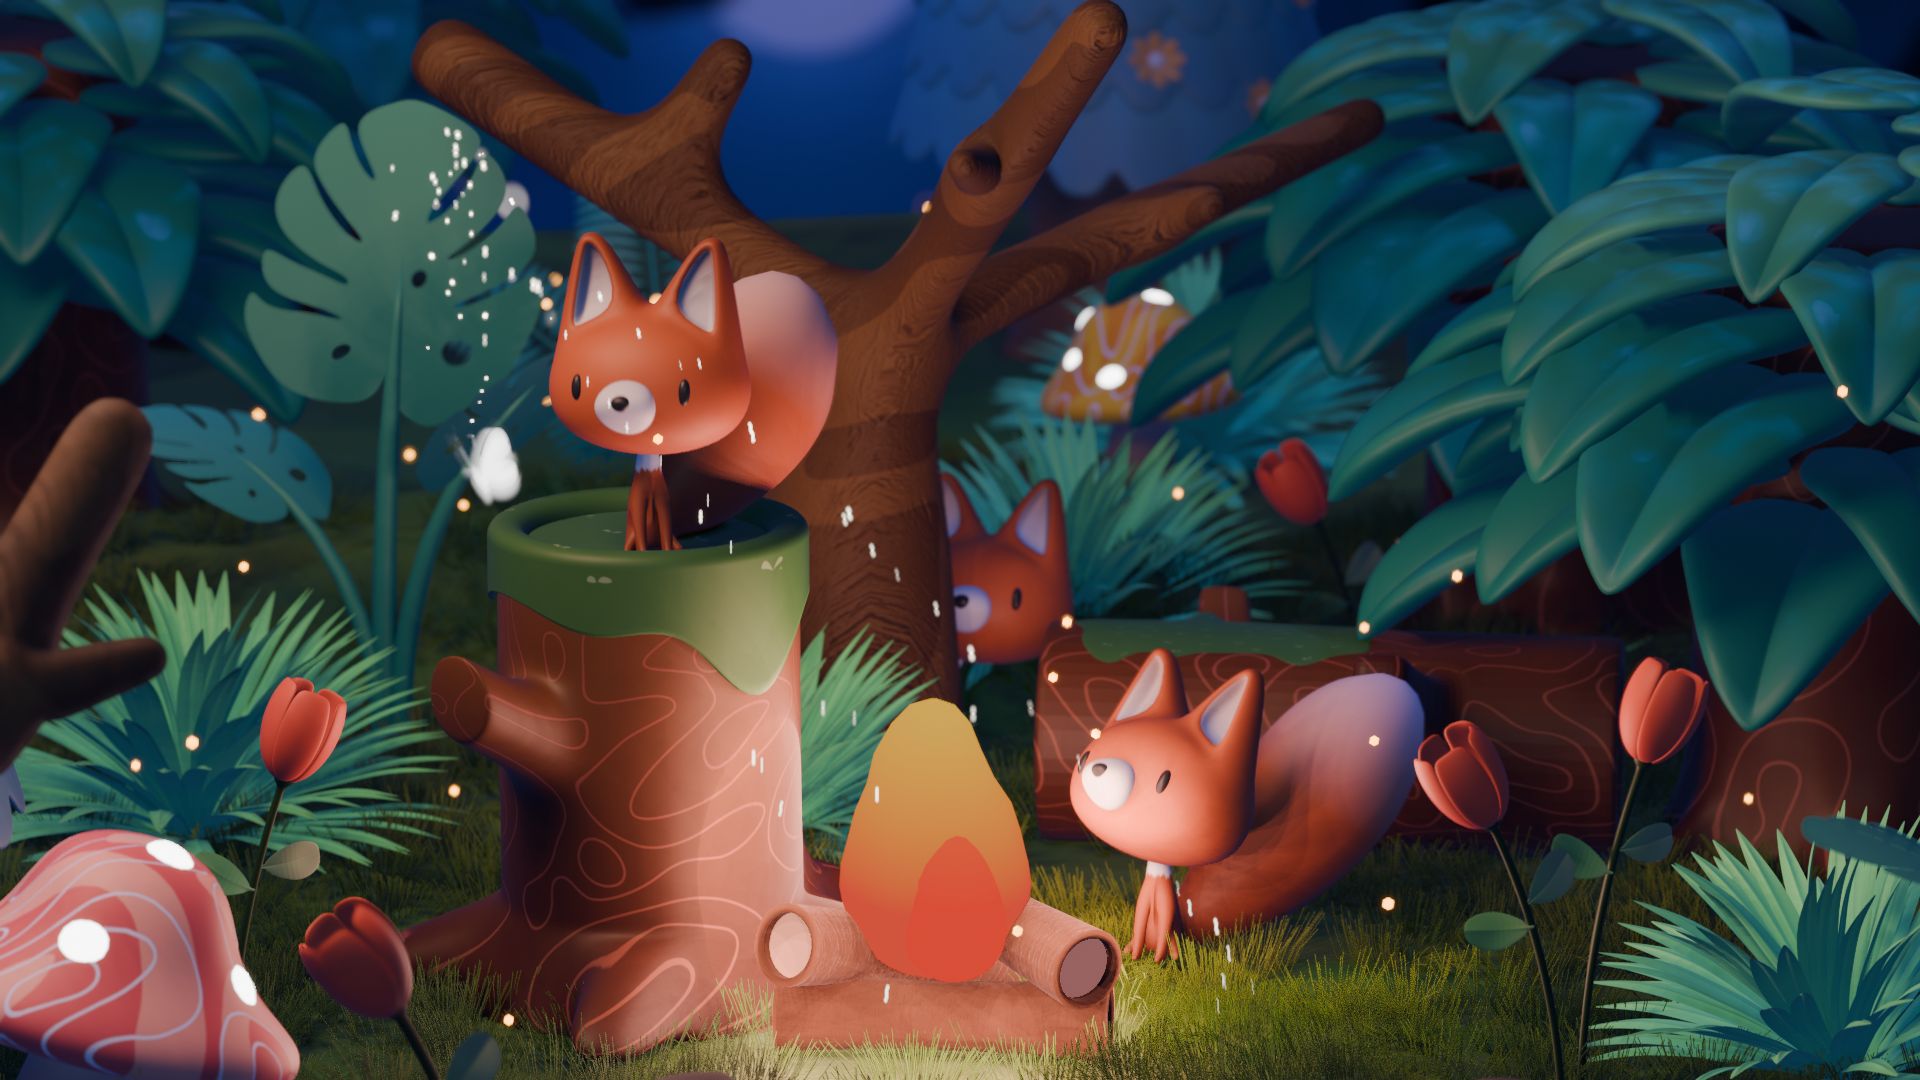 【blender】跟着kurtips老师完成的小狐狸场景动画